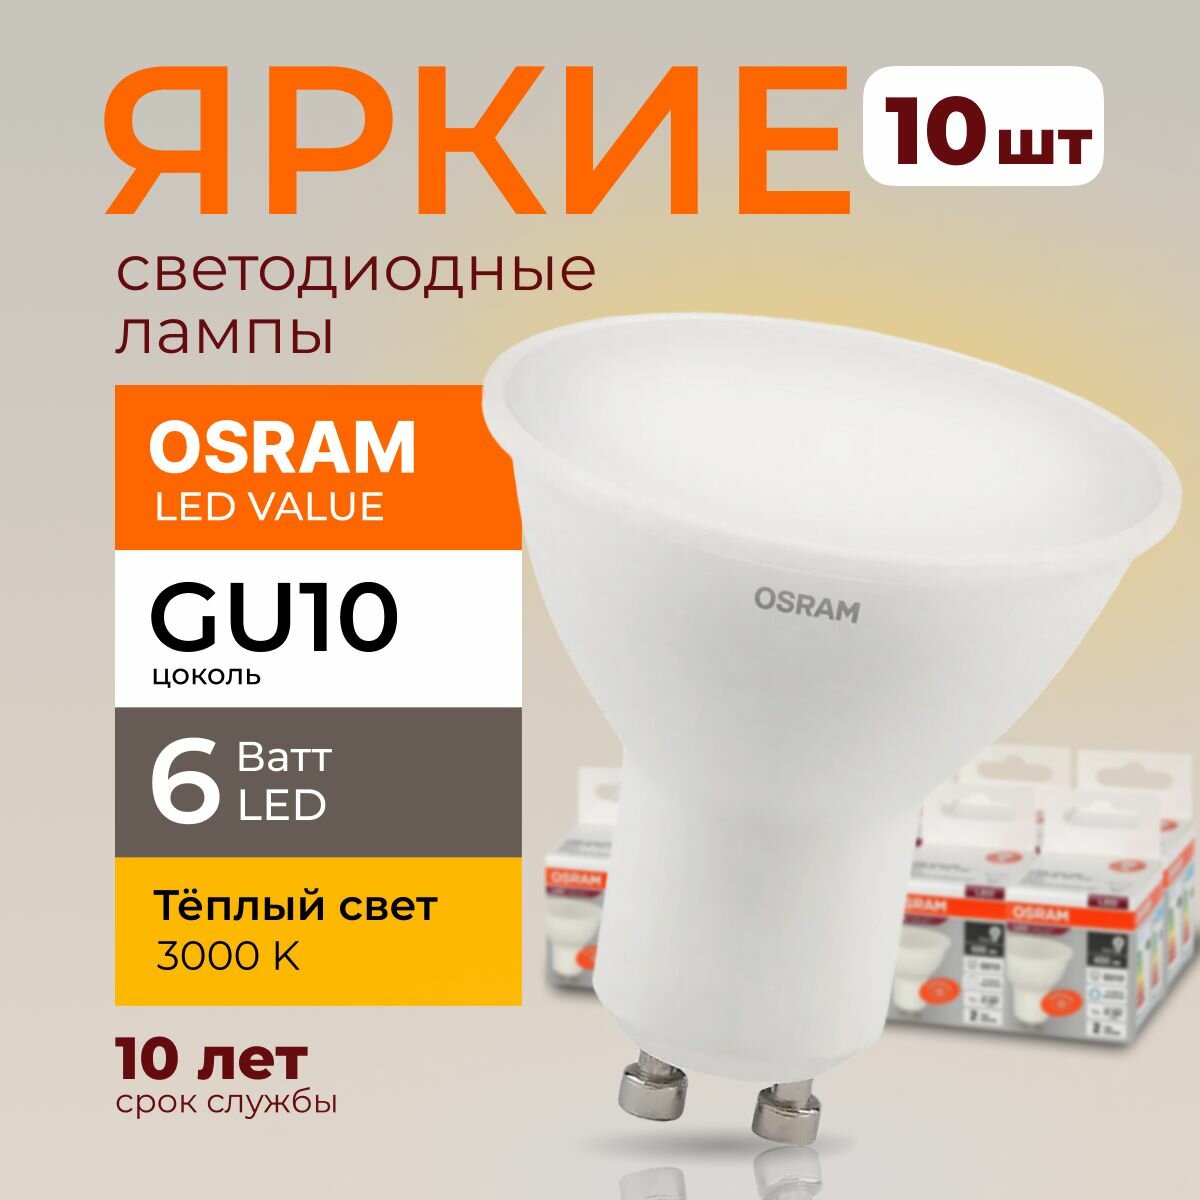 Светодиодная лампочка OSRAM GU10 6 Ватт 3000К теплый свет PAR16 спот 230V LED 830, 6W, 480lm, набор 10шт